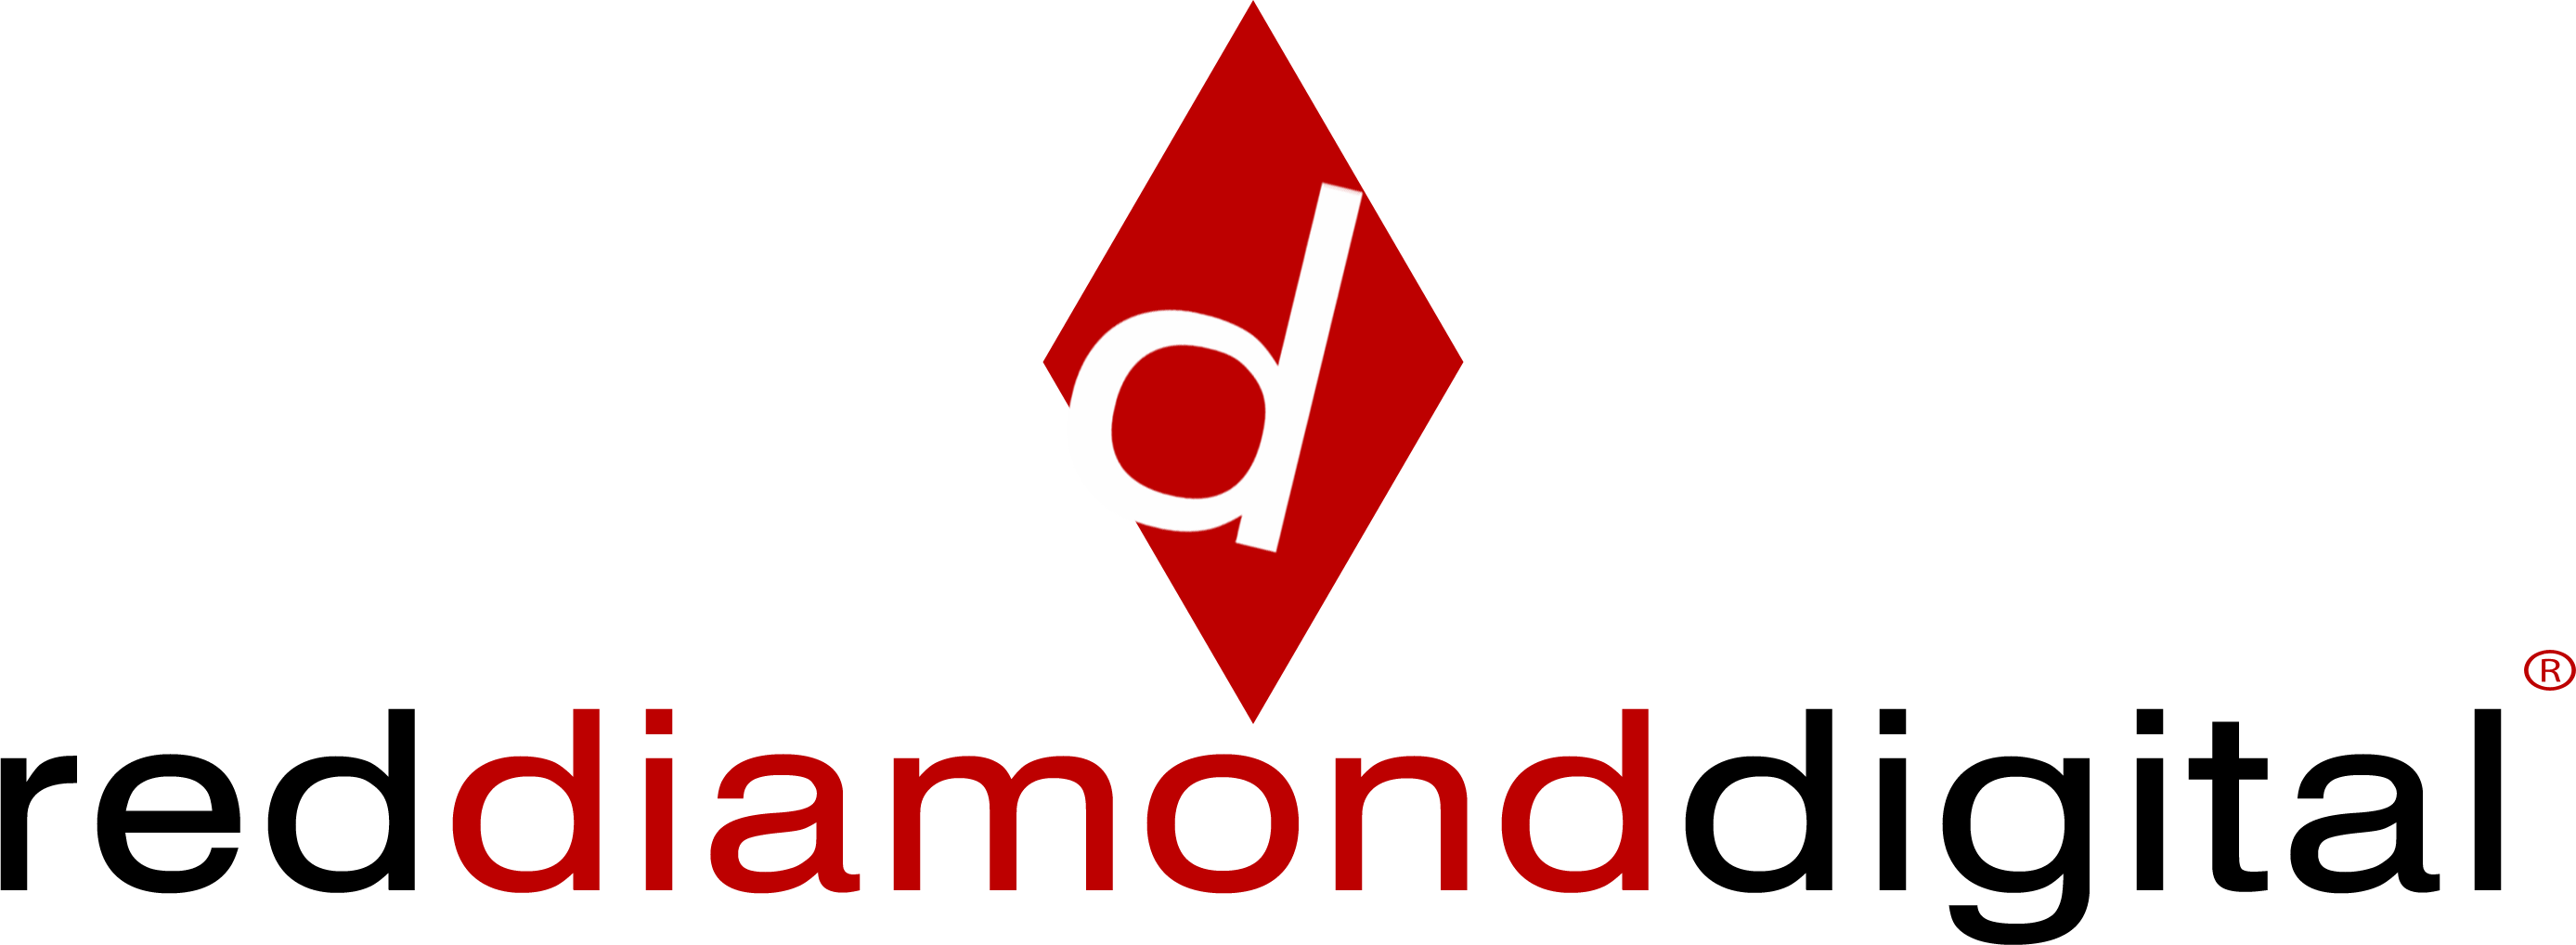 Red Diamond Logo - Red Diamond Digital Design, Graphic Design, Printing